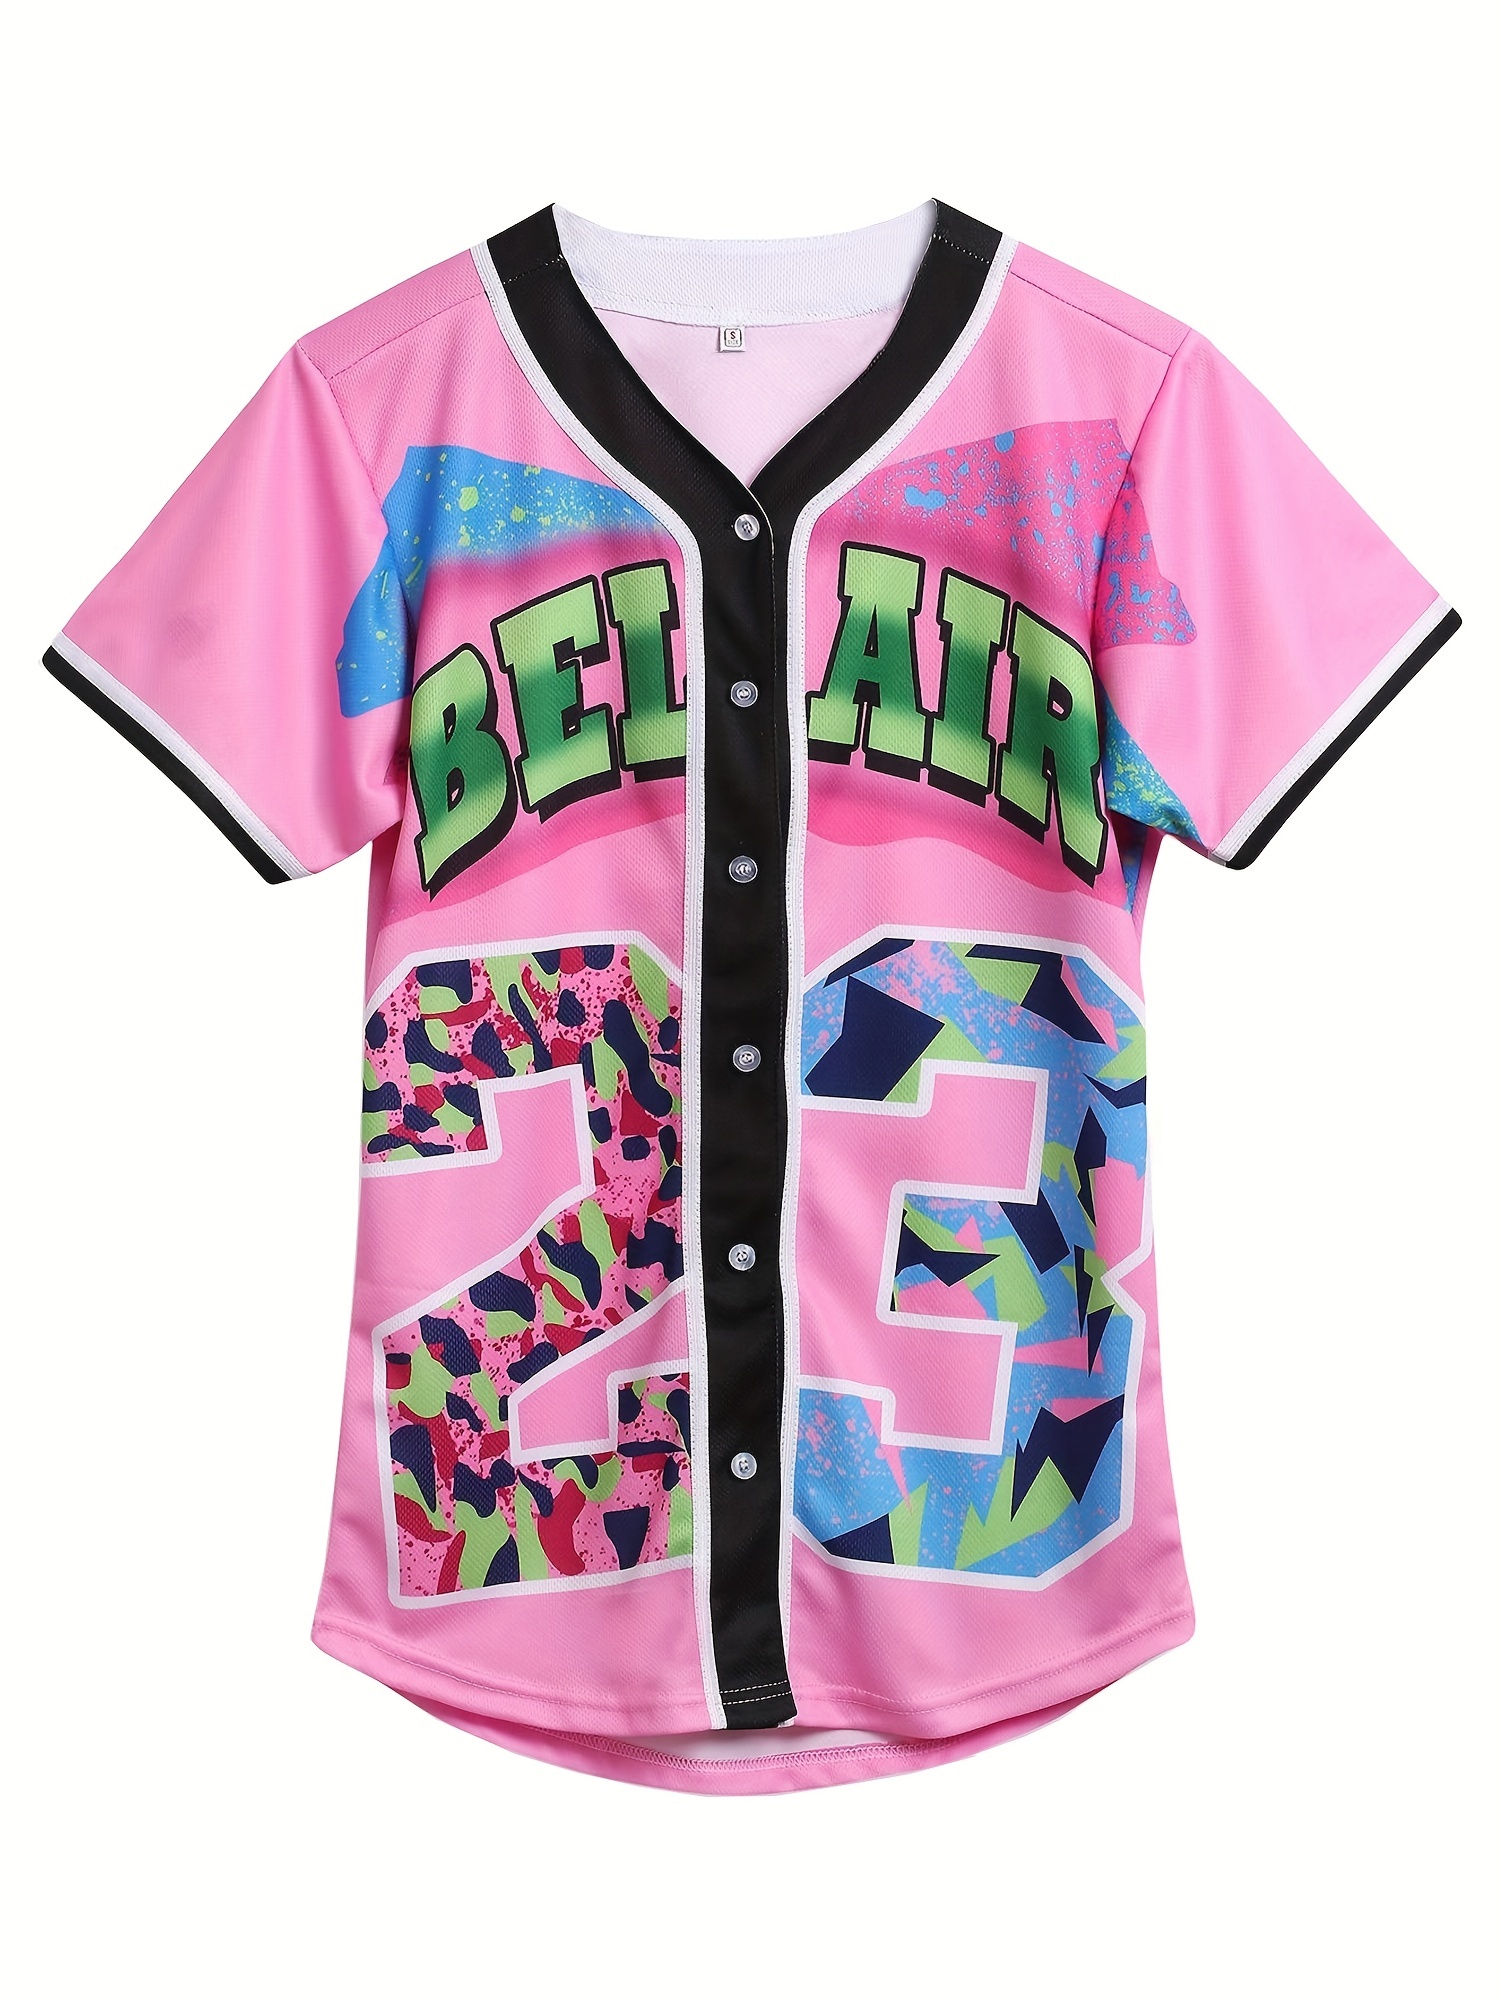 90s Bel Air 23 Printed Baseball Jersey  Baseball jersey outfit, Baseball  jerseys, Jersey outfit